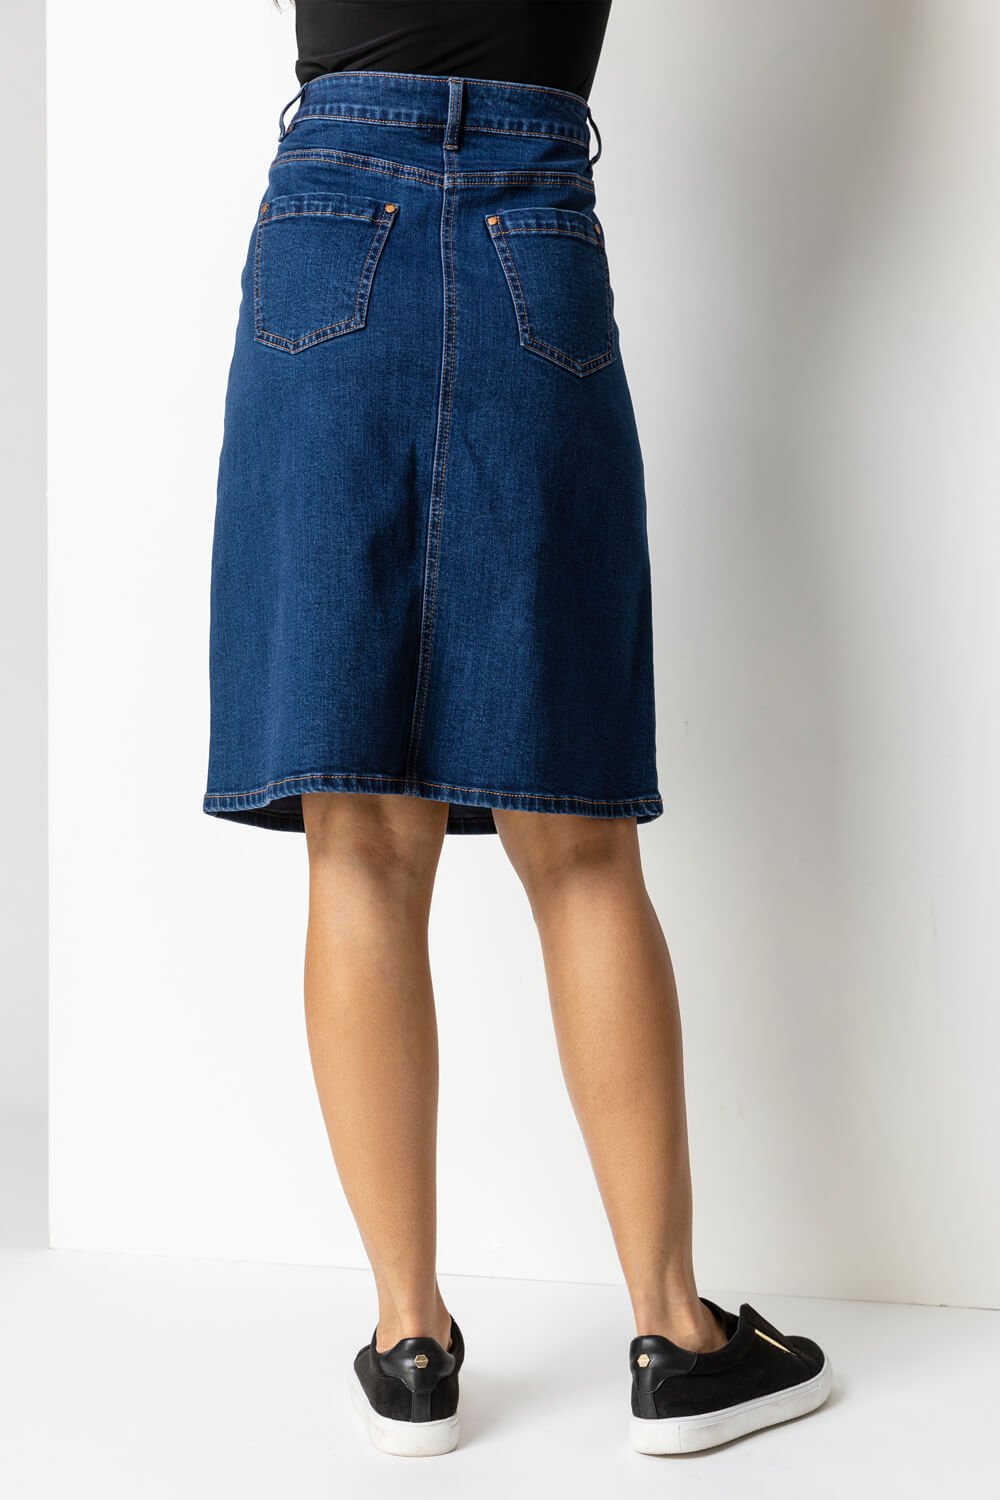 Indigo Cotton Denim Stretch Skirt, Image 2 of 4